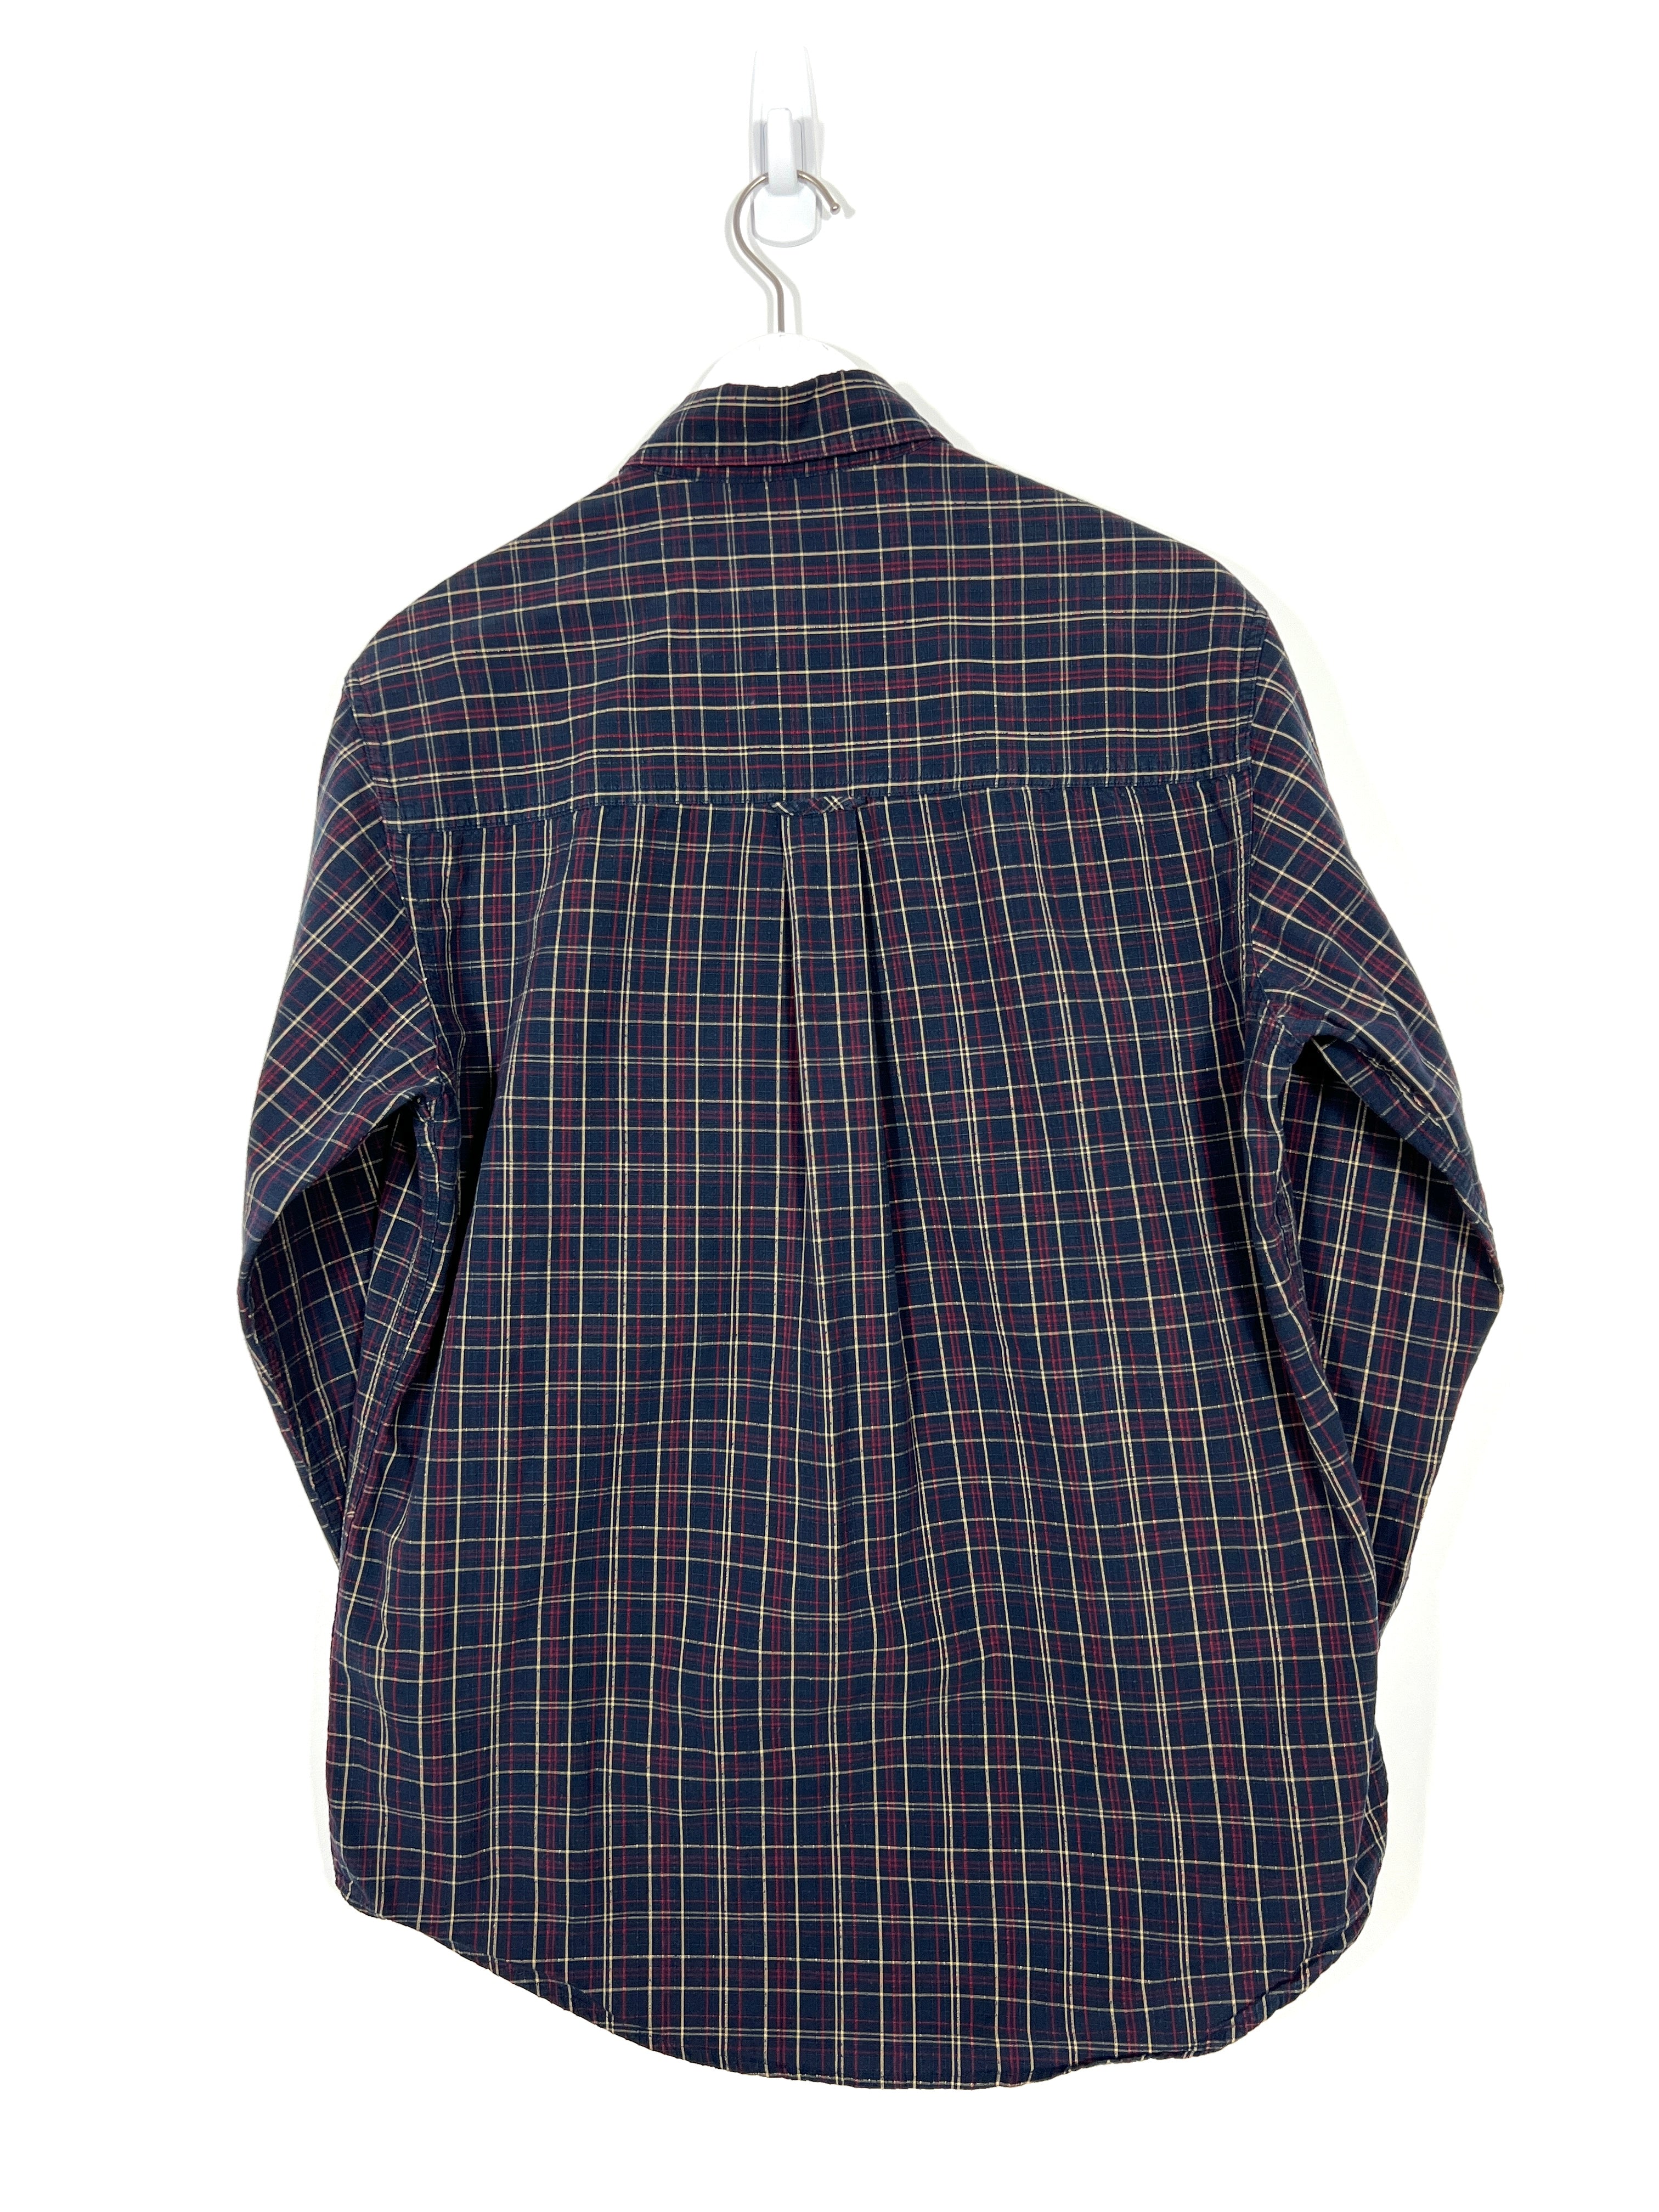 Vintage Chaps Ralph Lauren Shirt - Men's Small